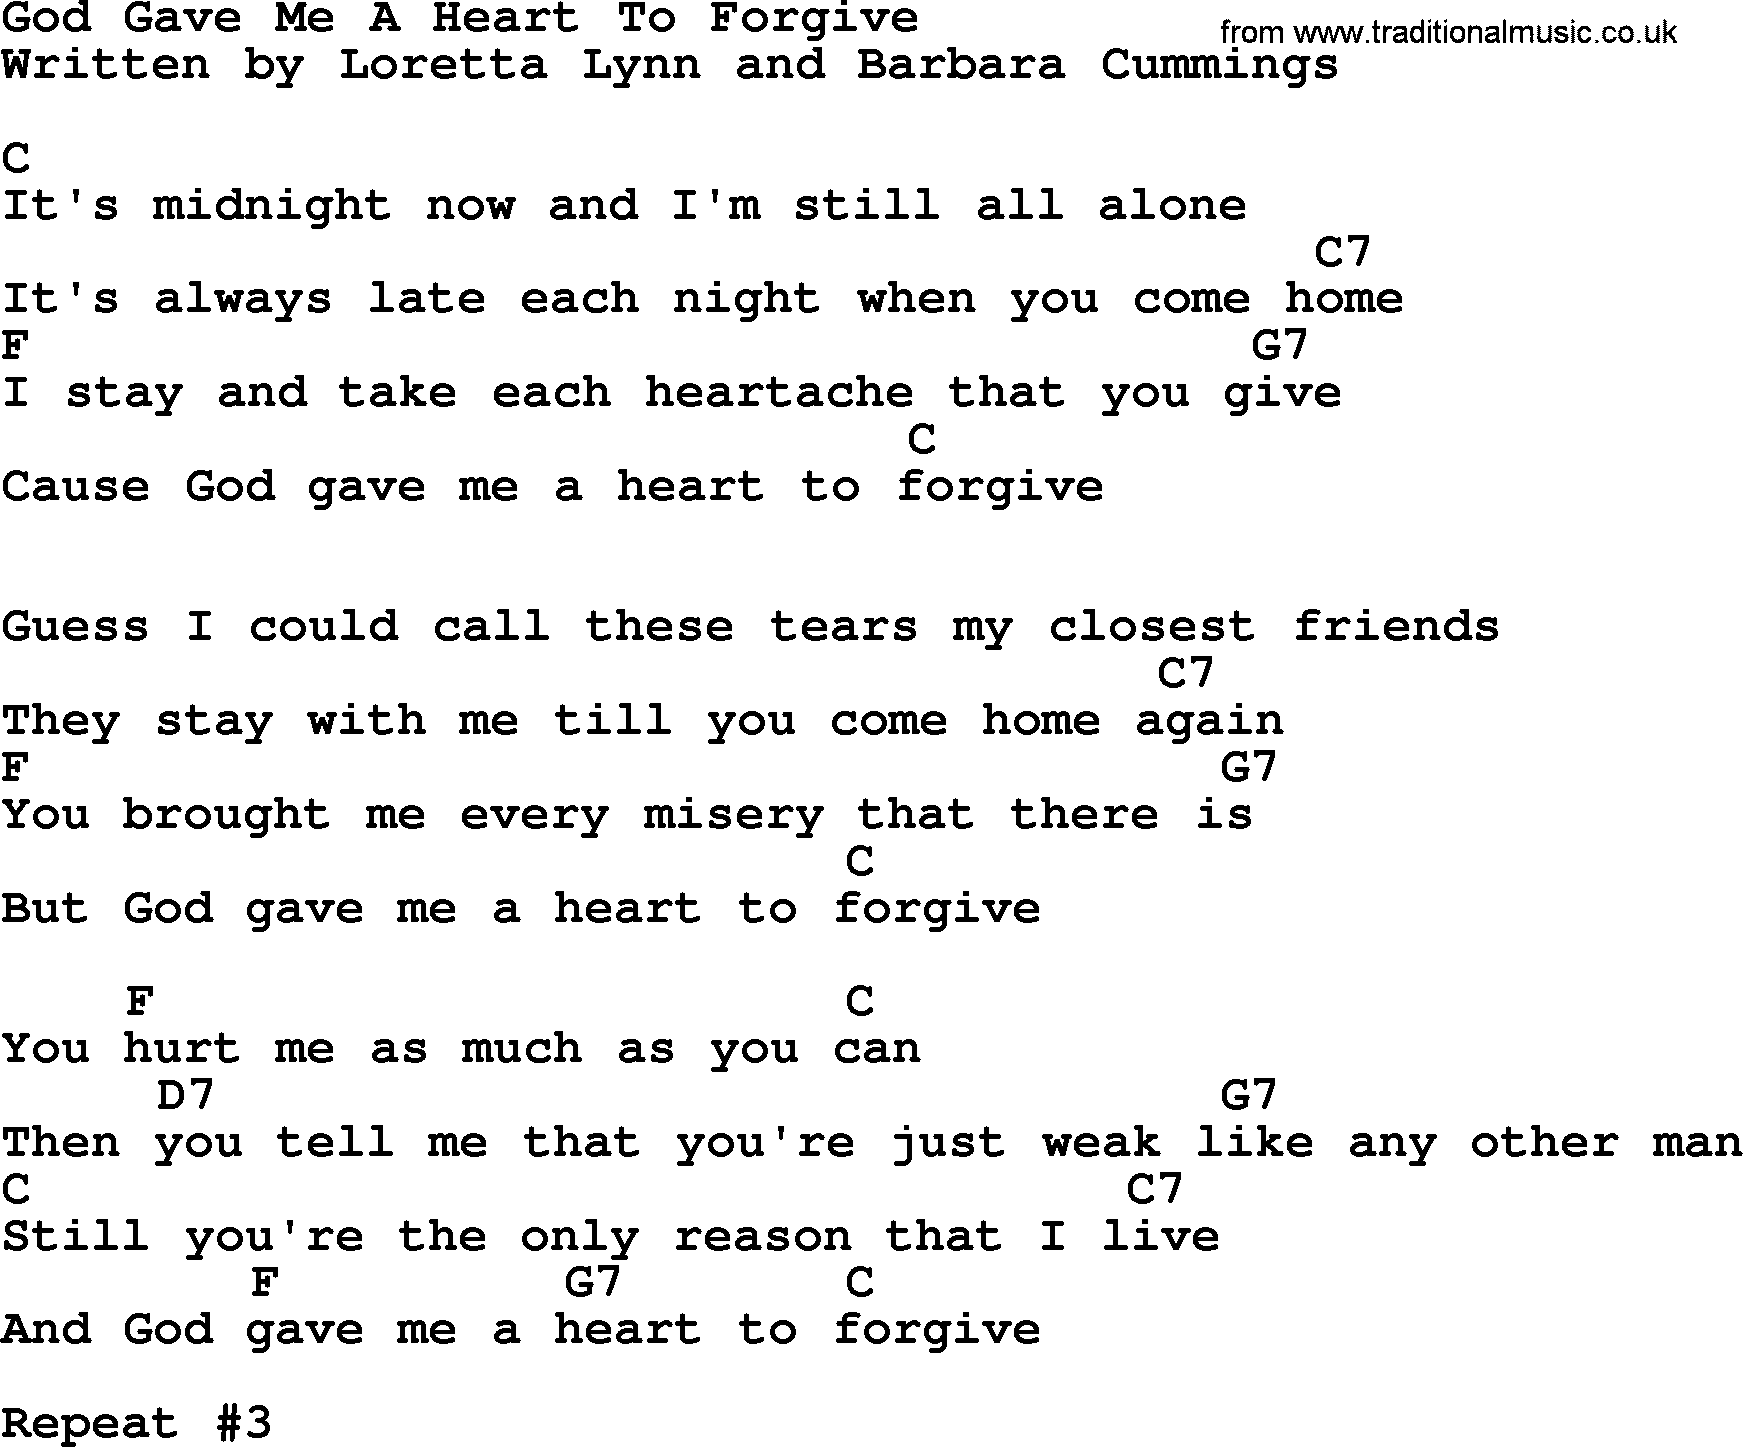 Loretta Lynn song: God Gave Me A Heart To Forgive lyrics and chords